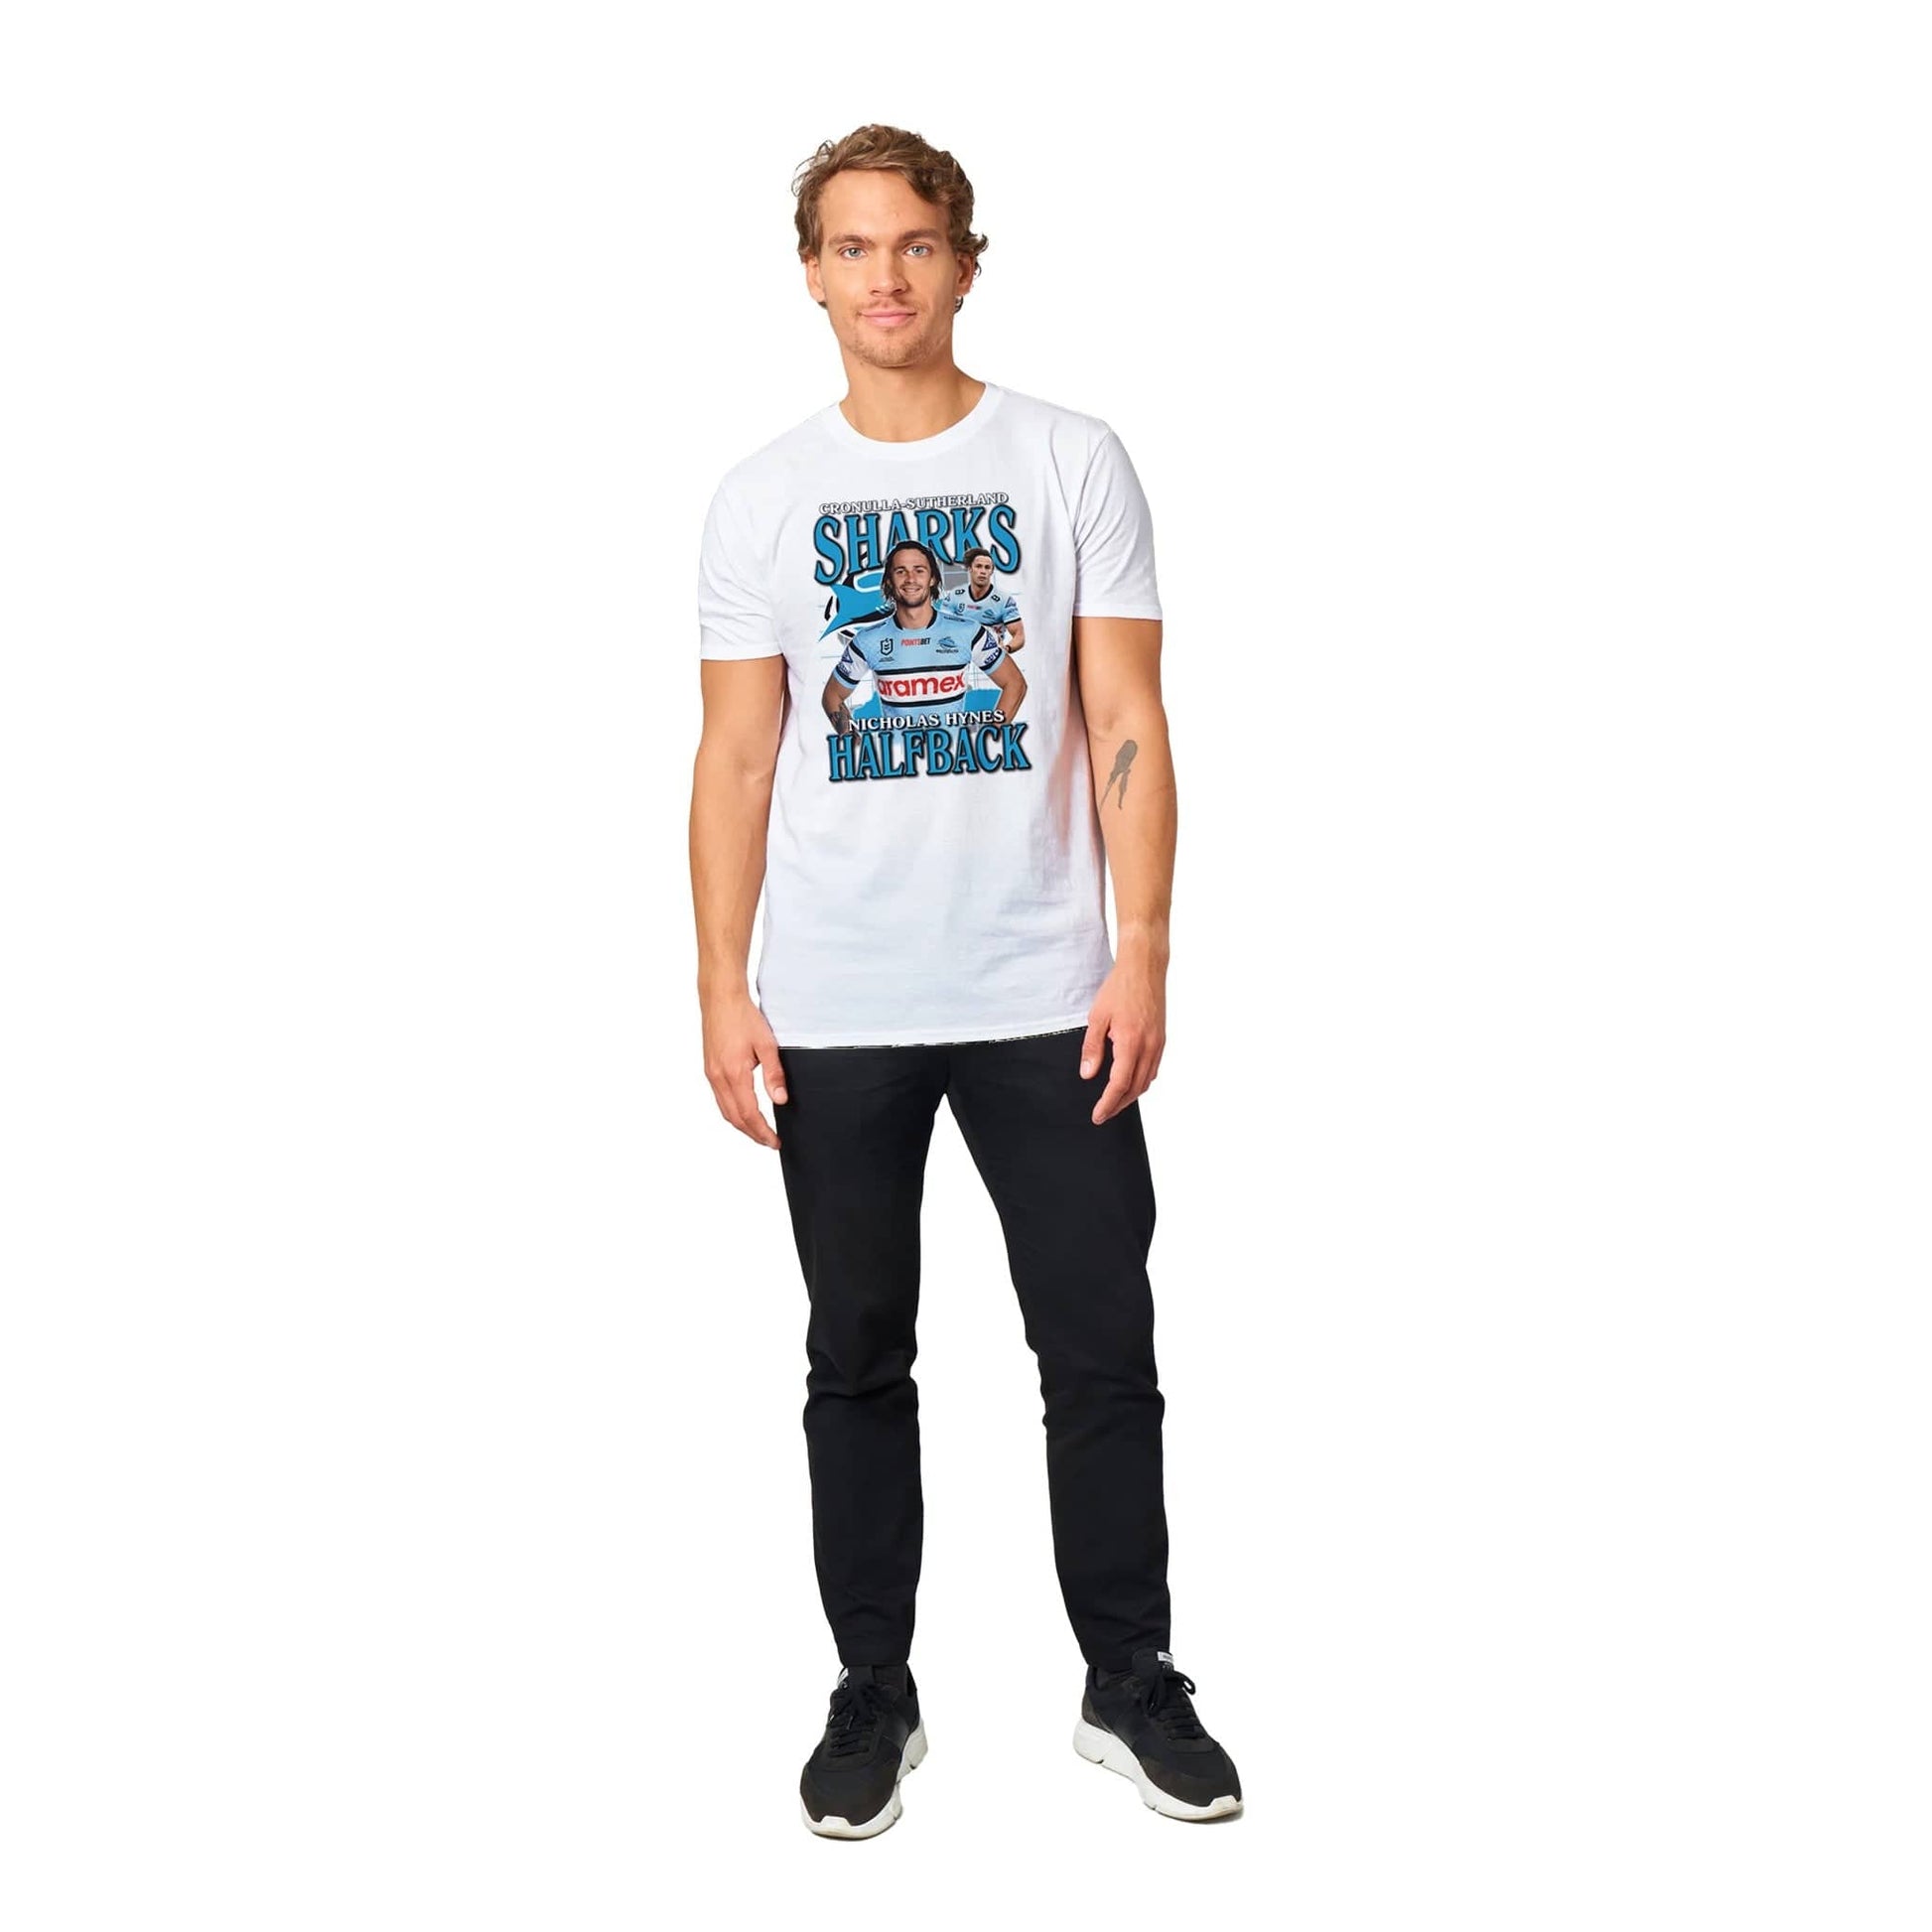 Nicho Hynes T-shirt Australia Online Color